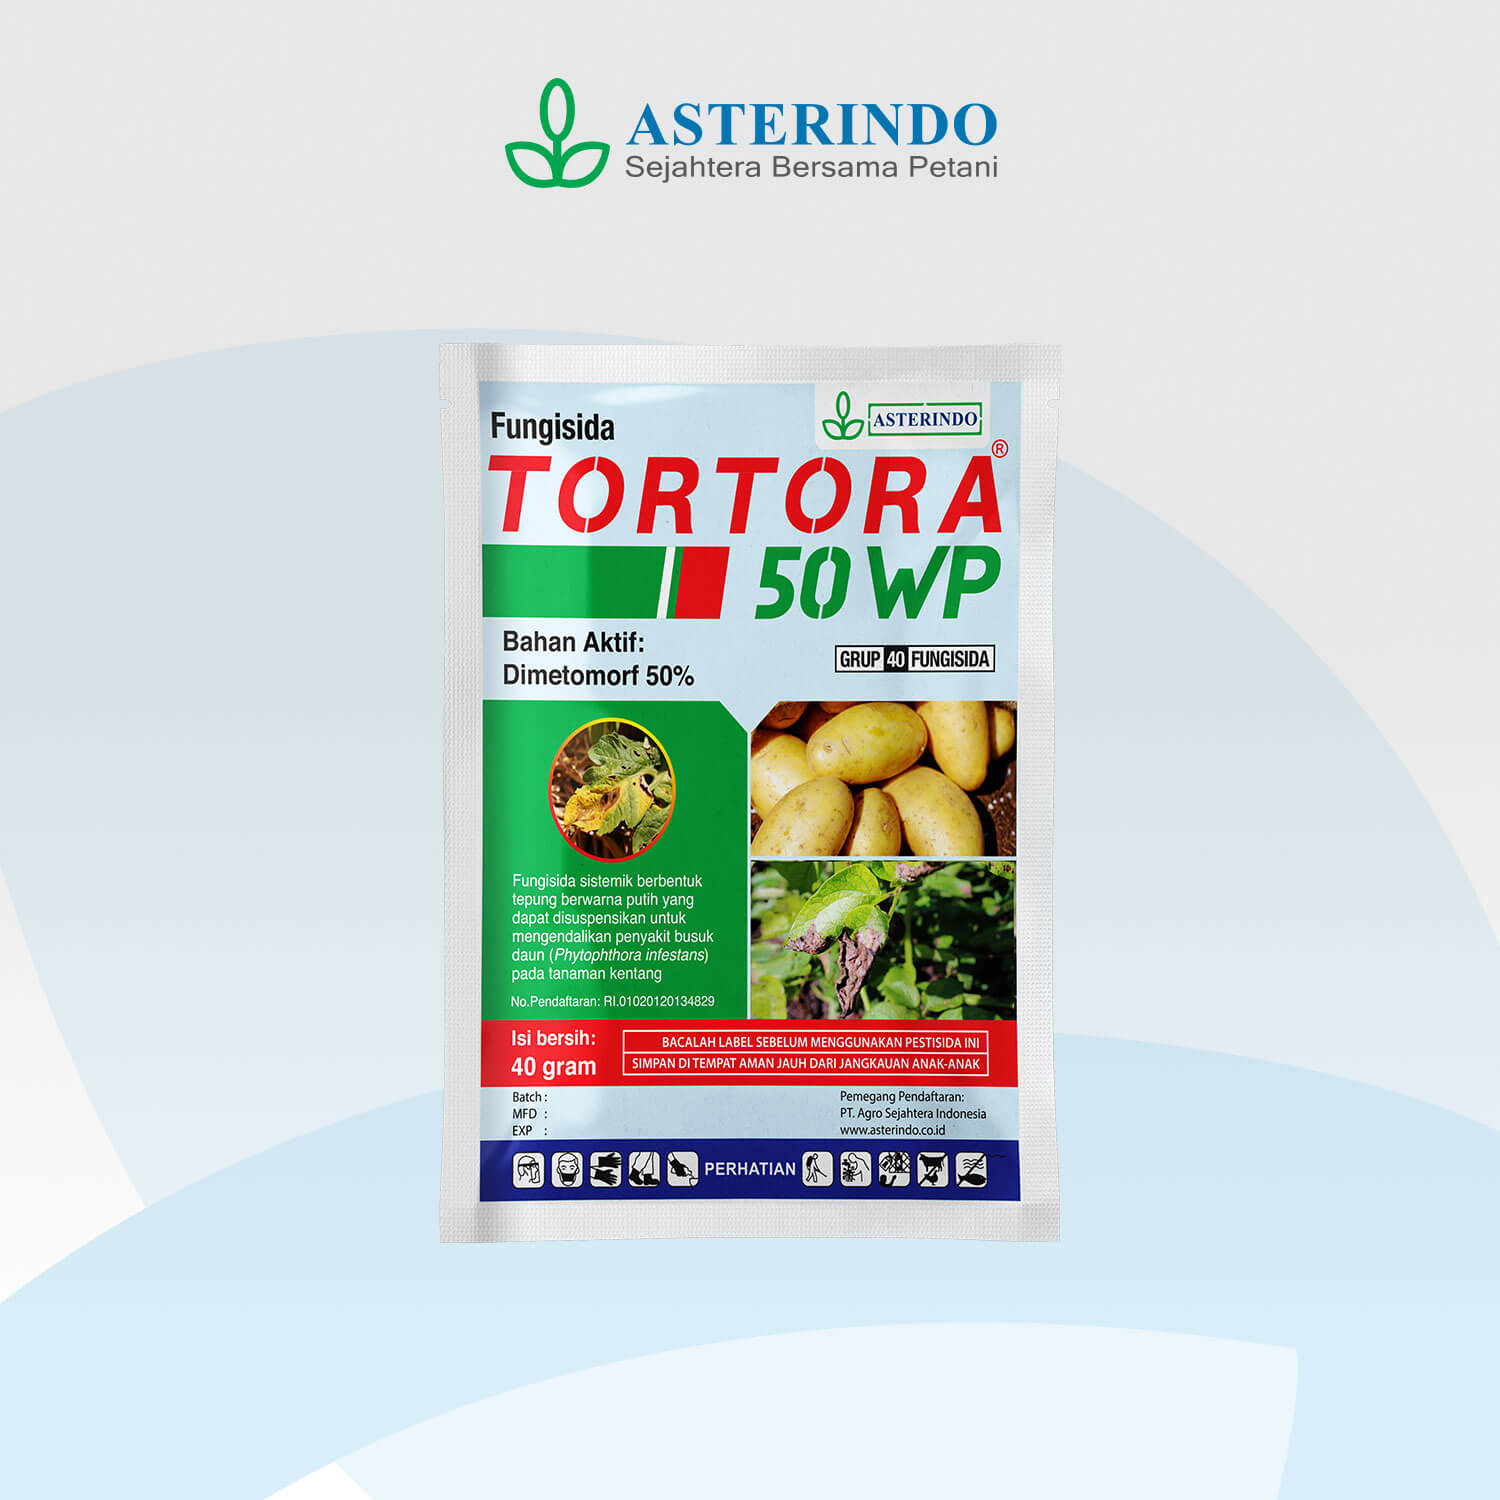 TORTORA-fungisida-Asterindo